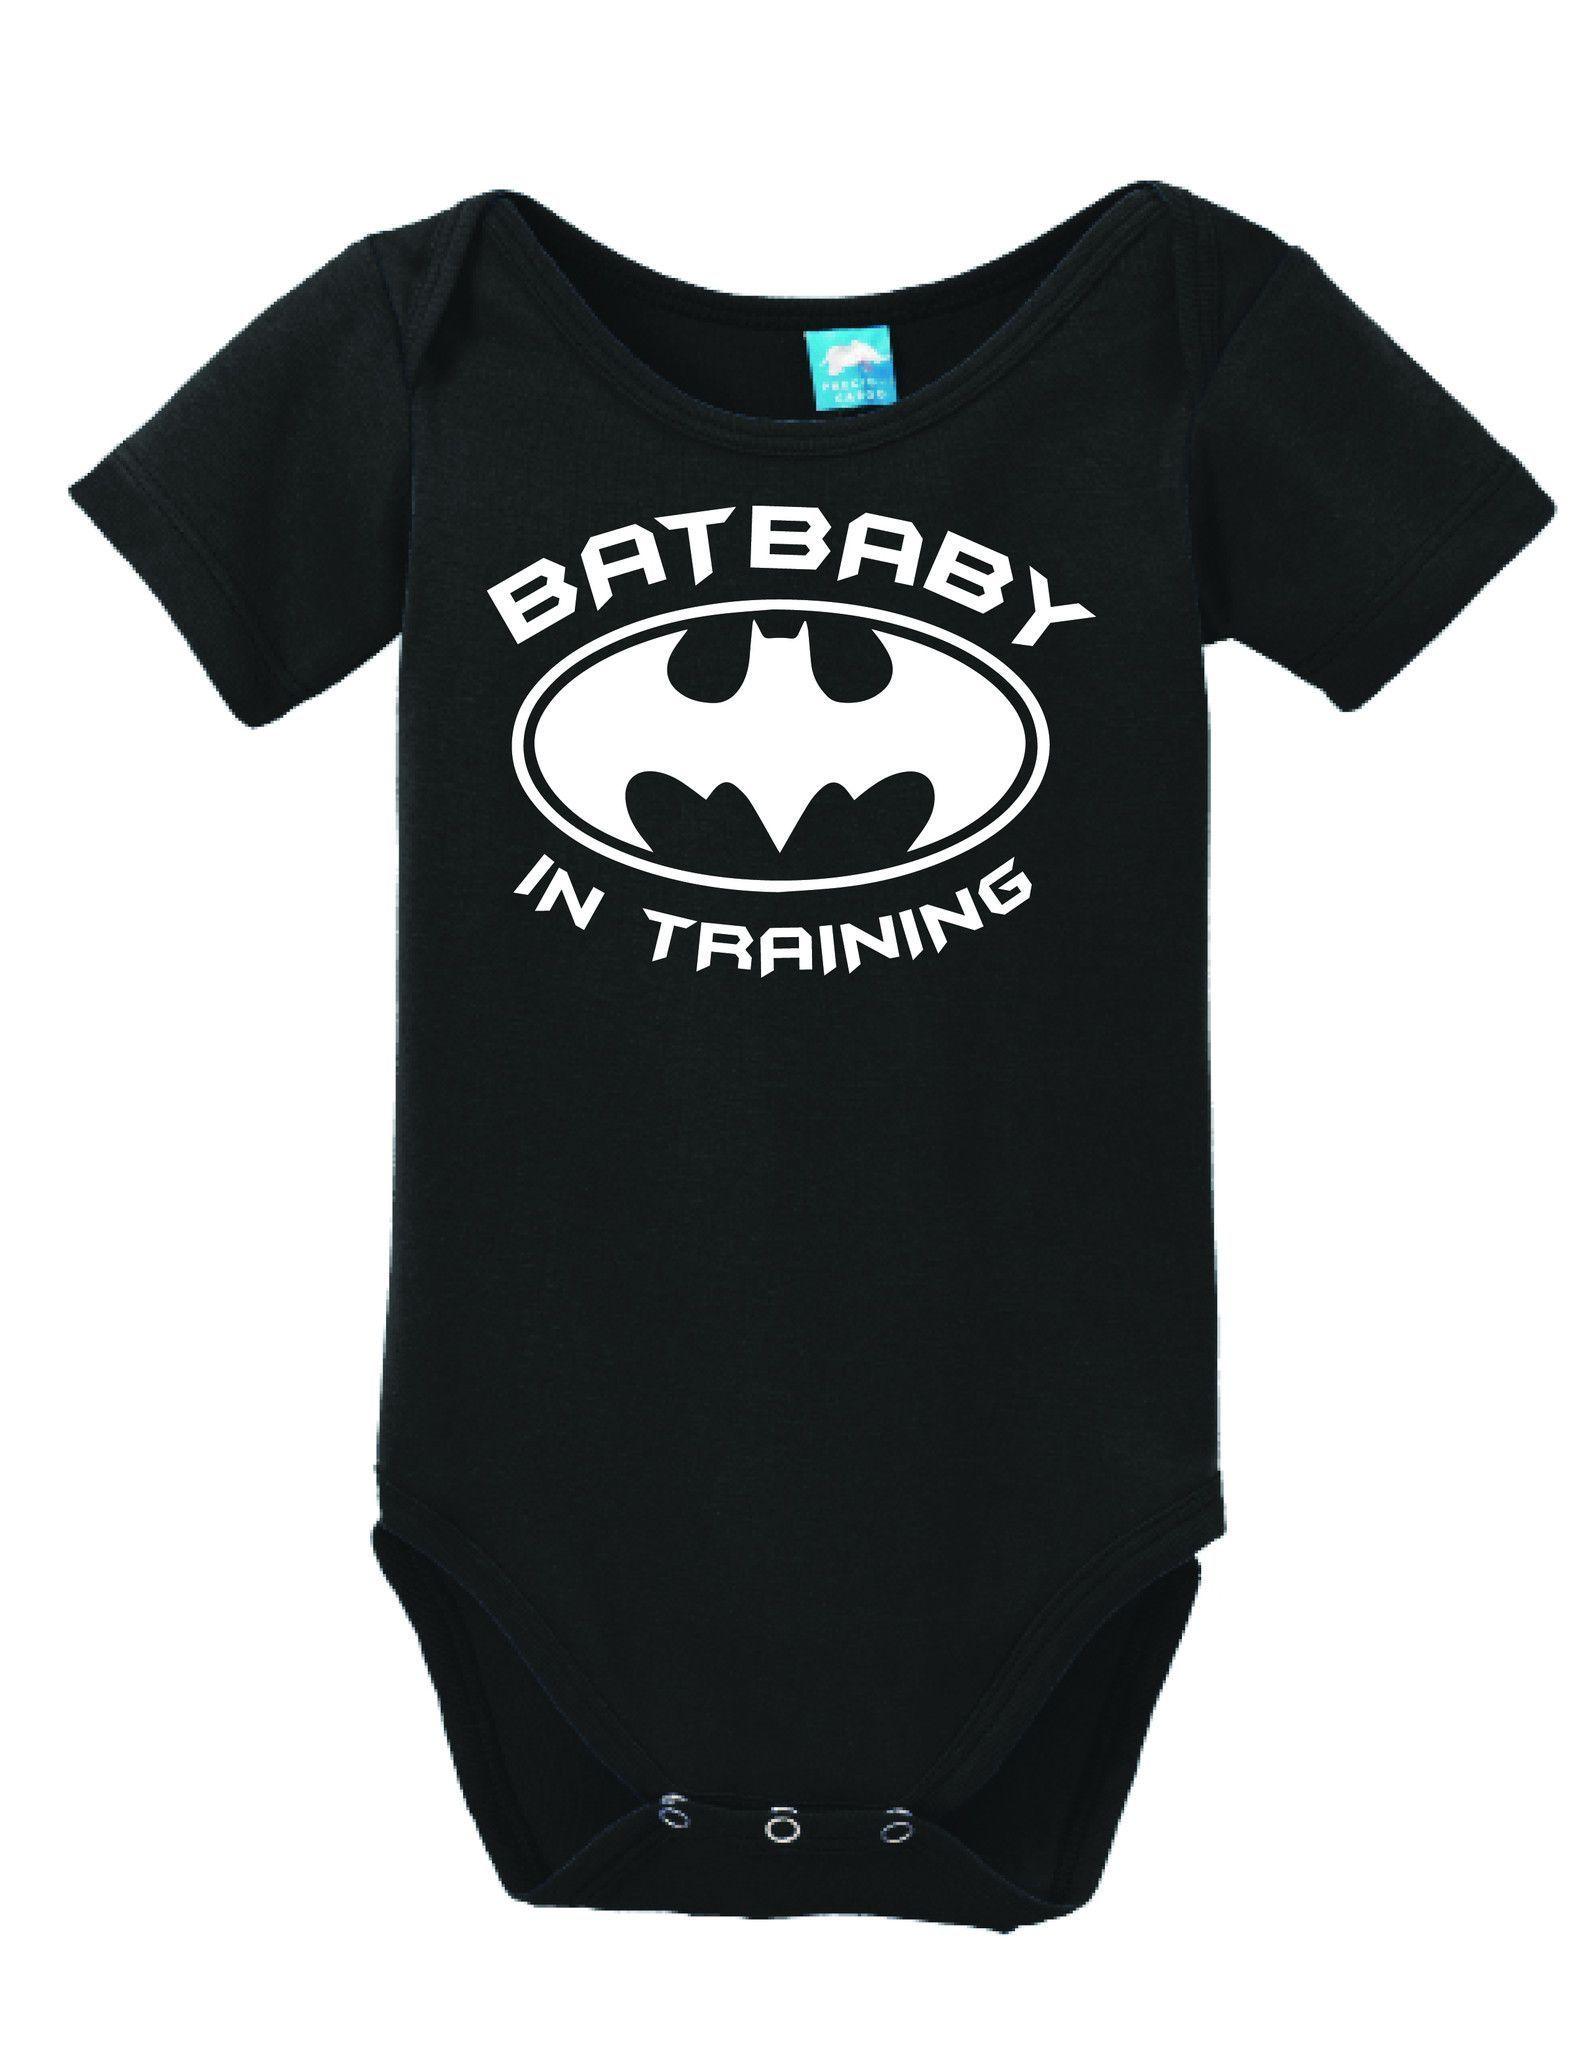 Batbaby Logo - Batbaby In Training. Funny!. Celebrity babies, Baby batman, Baby